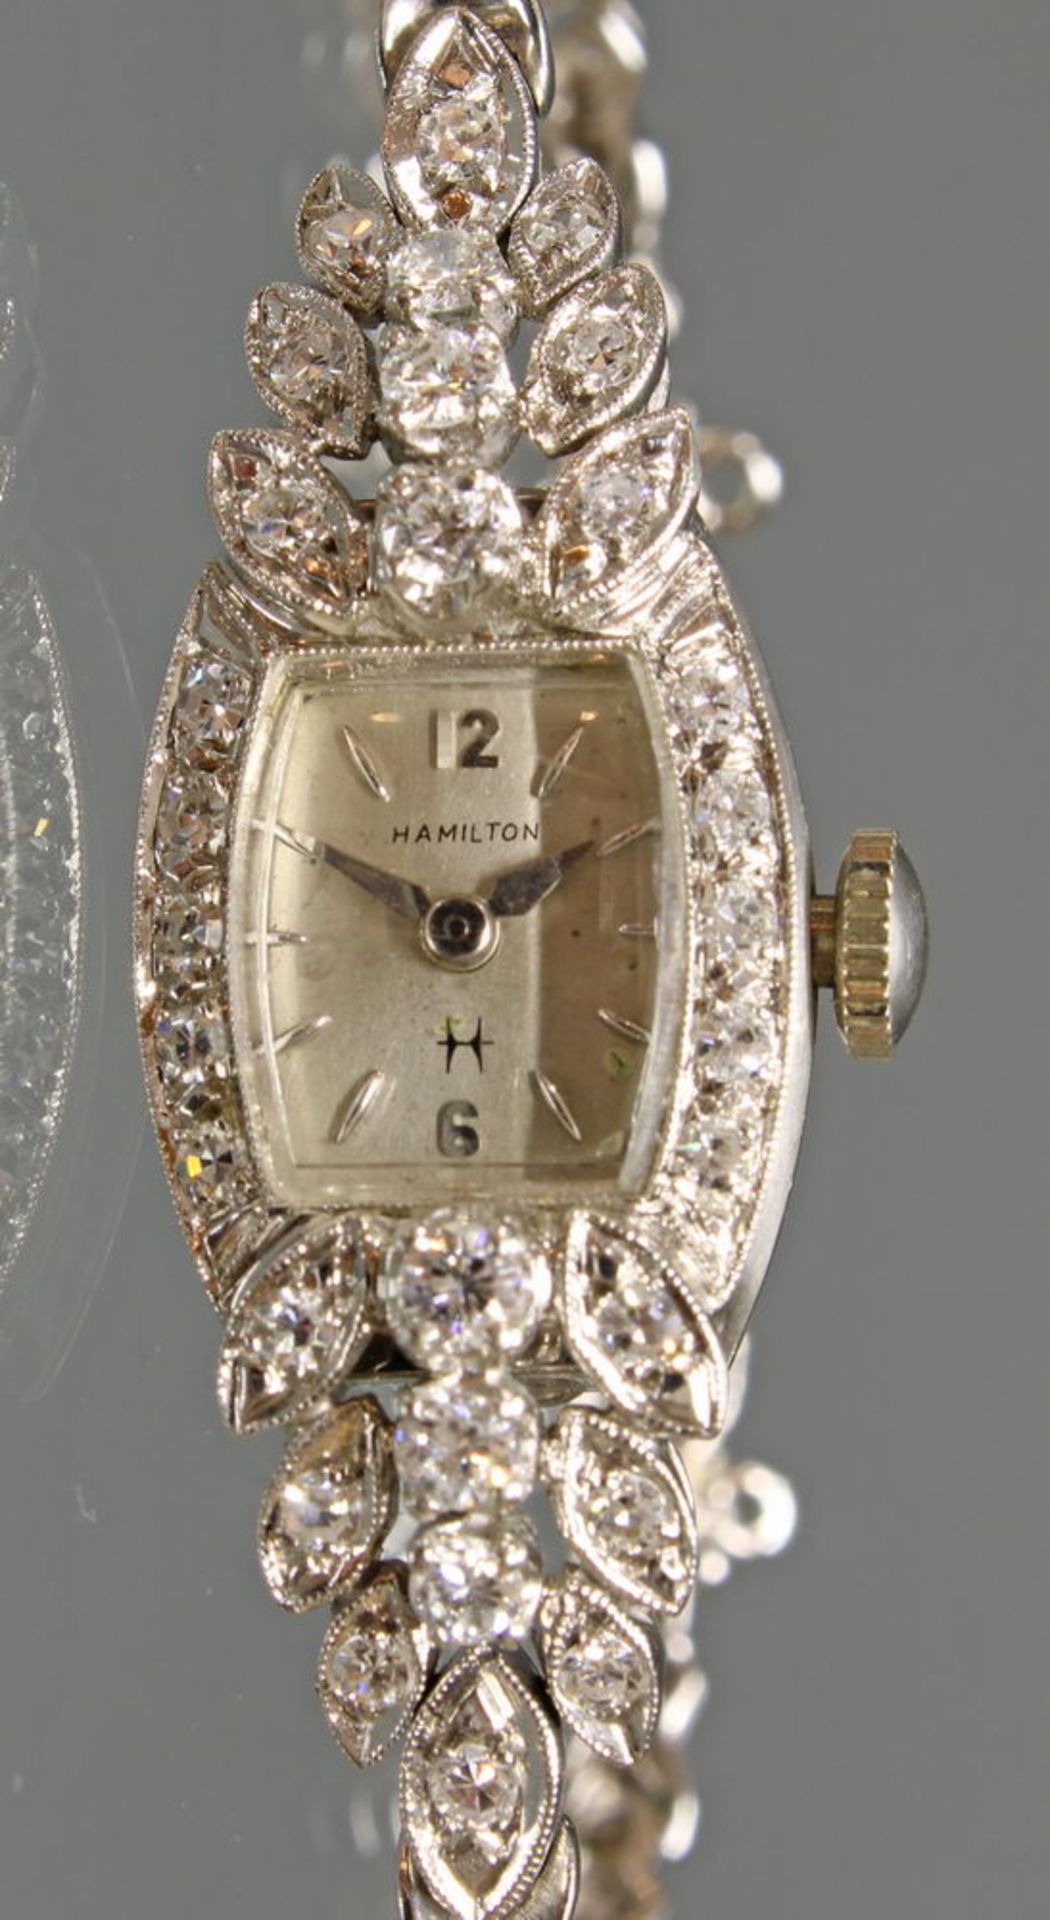 Schmuck-Damenarmbanduhr, 'Hamilton', 1960er Jahre, WG 585, Brillant-Lünette, Handaufzug, silberfar - Image 2 of 2